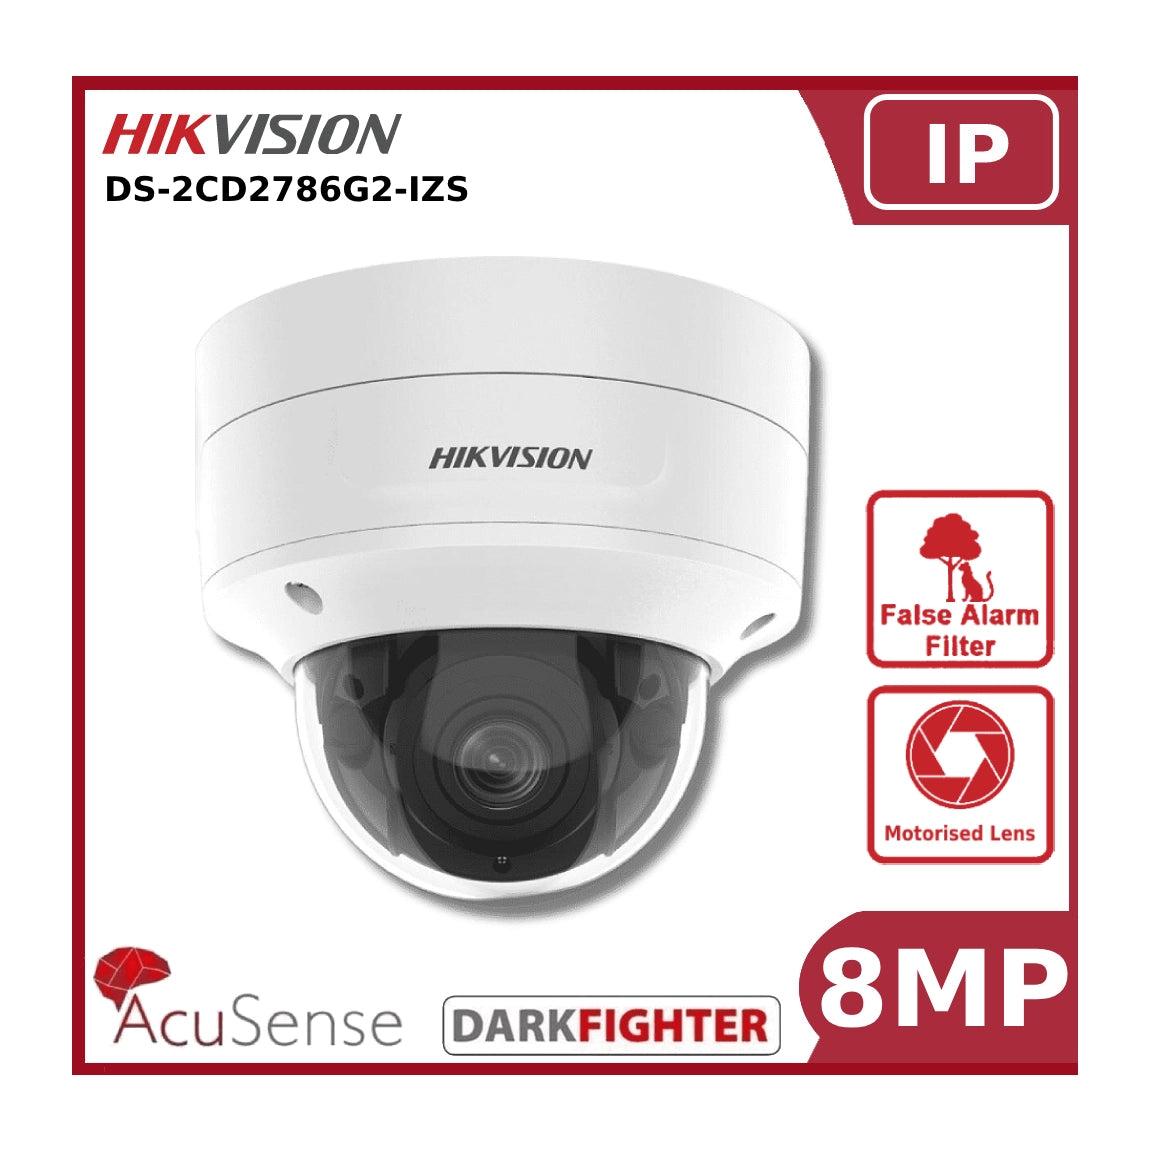 Hikvision 8MP DS-2CD2786G2-IZS Acusense Motorized Varifocal Dome Network IP Camera